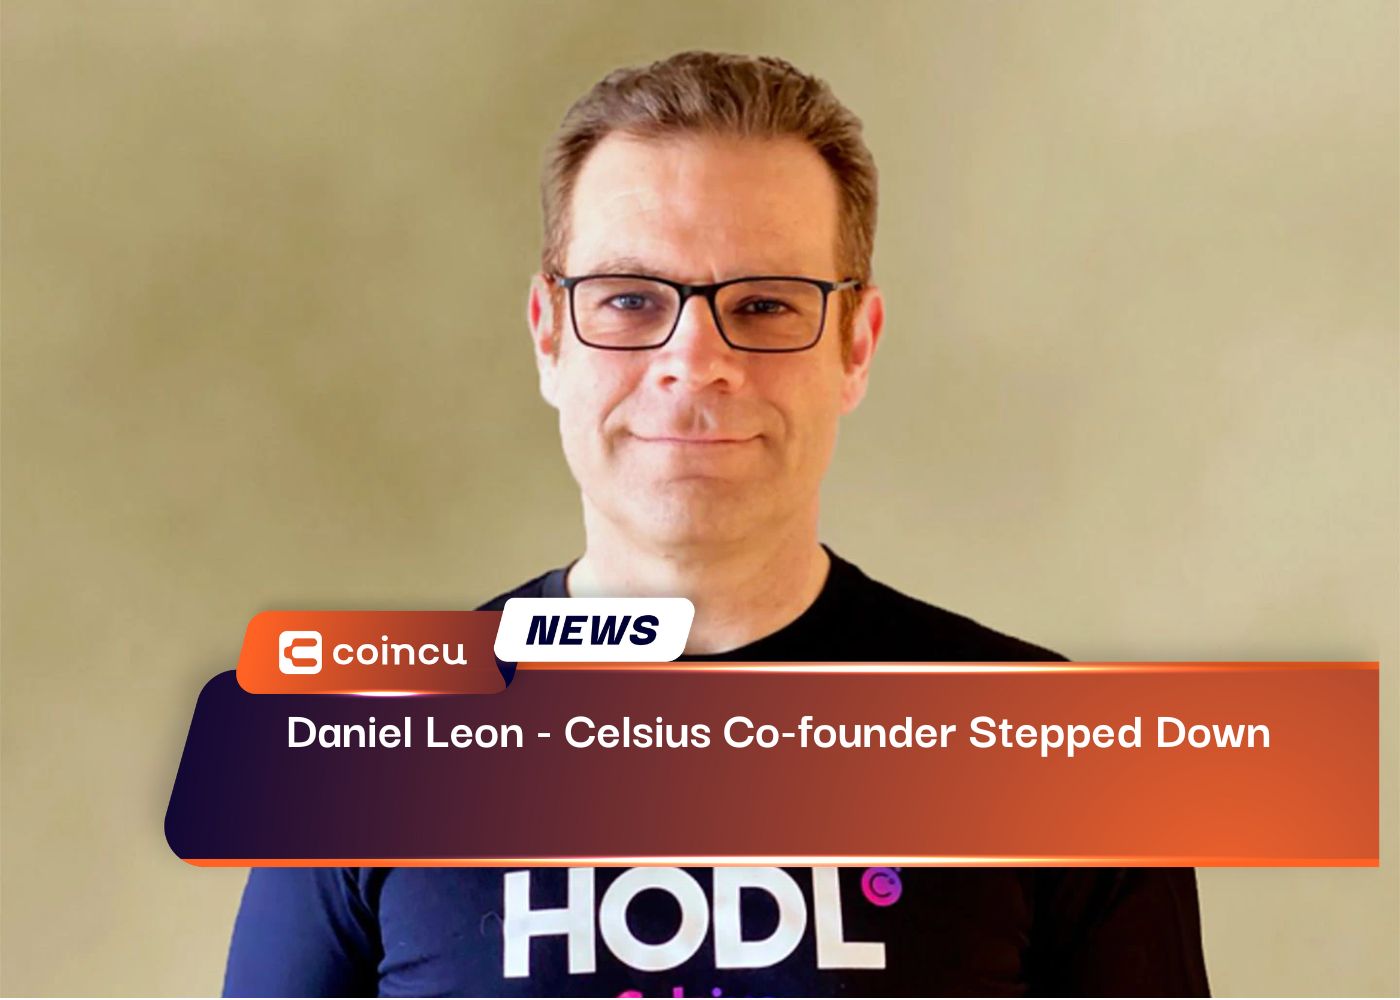 Daniel Leon - Celsius Co-founder Stepped Down